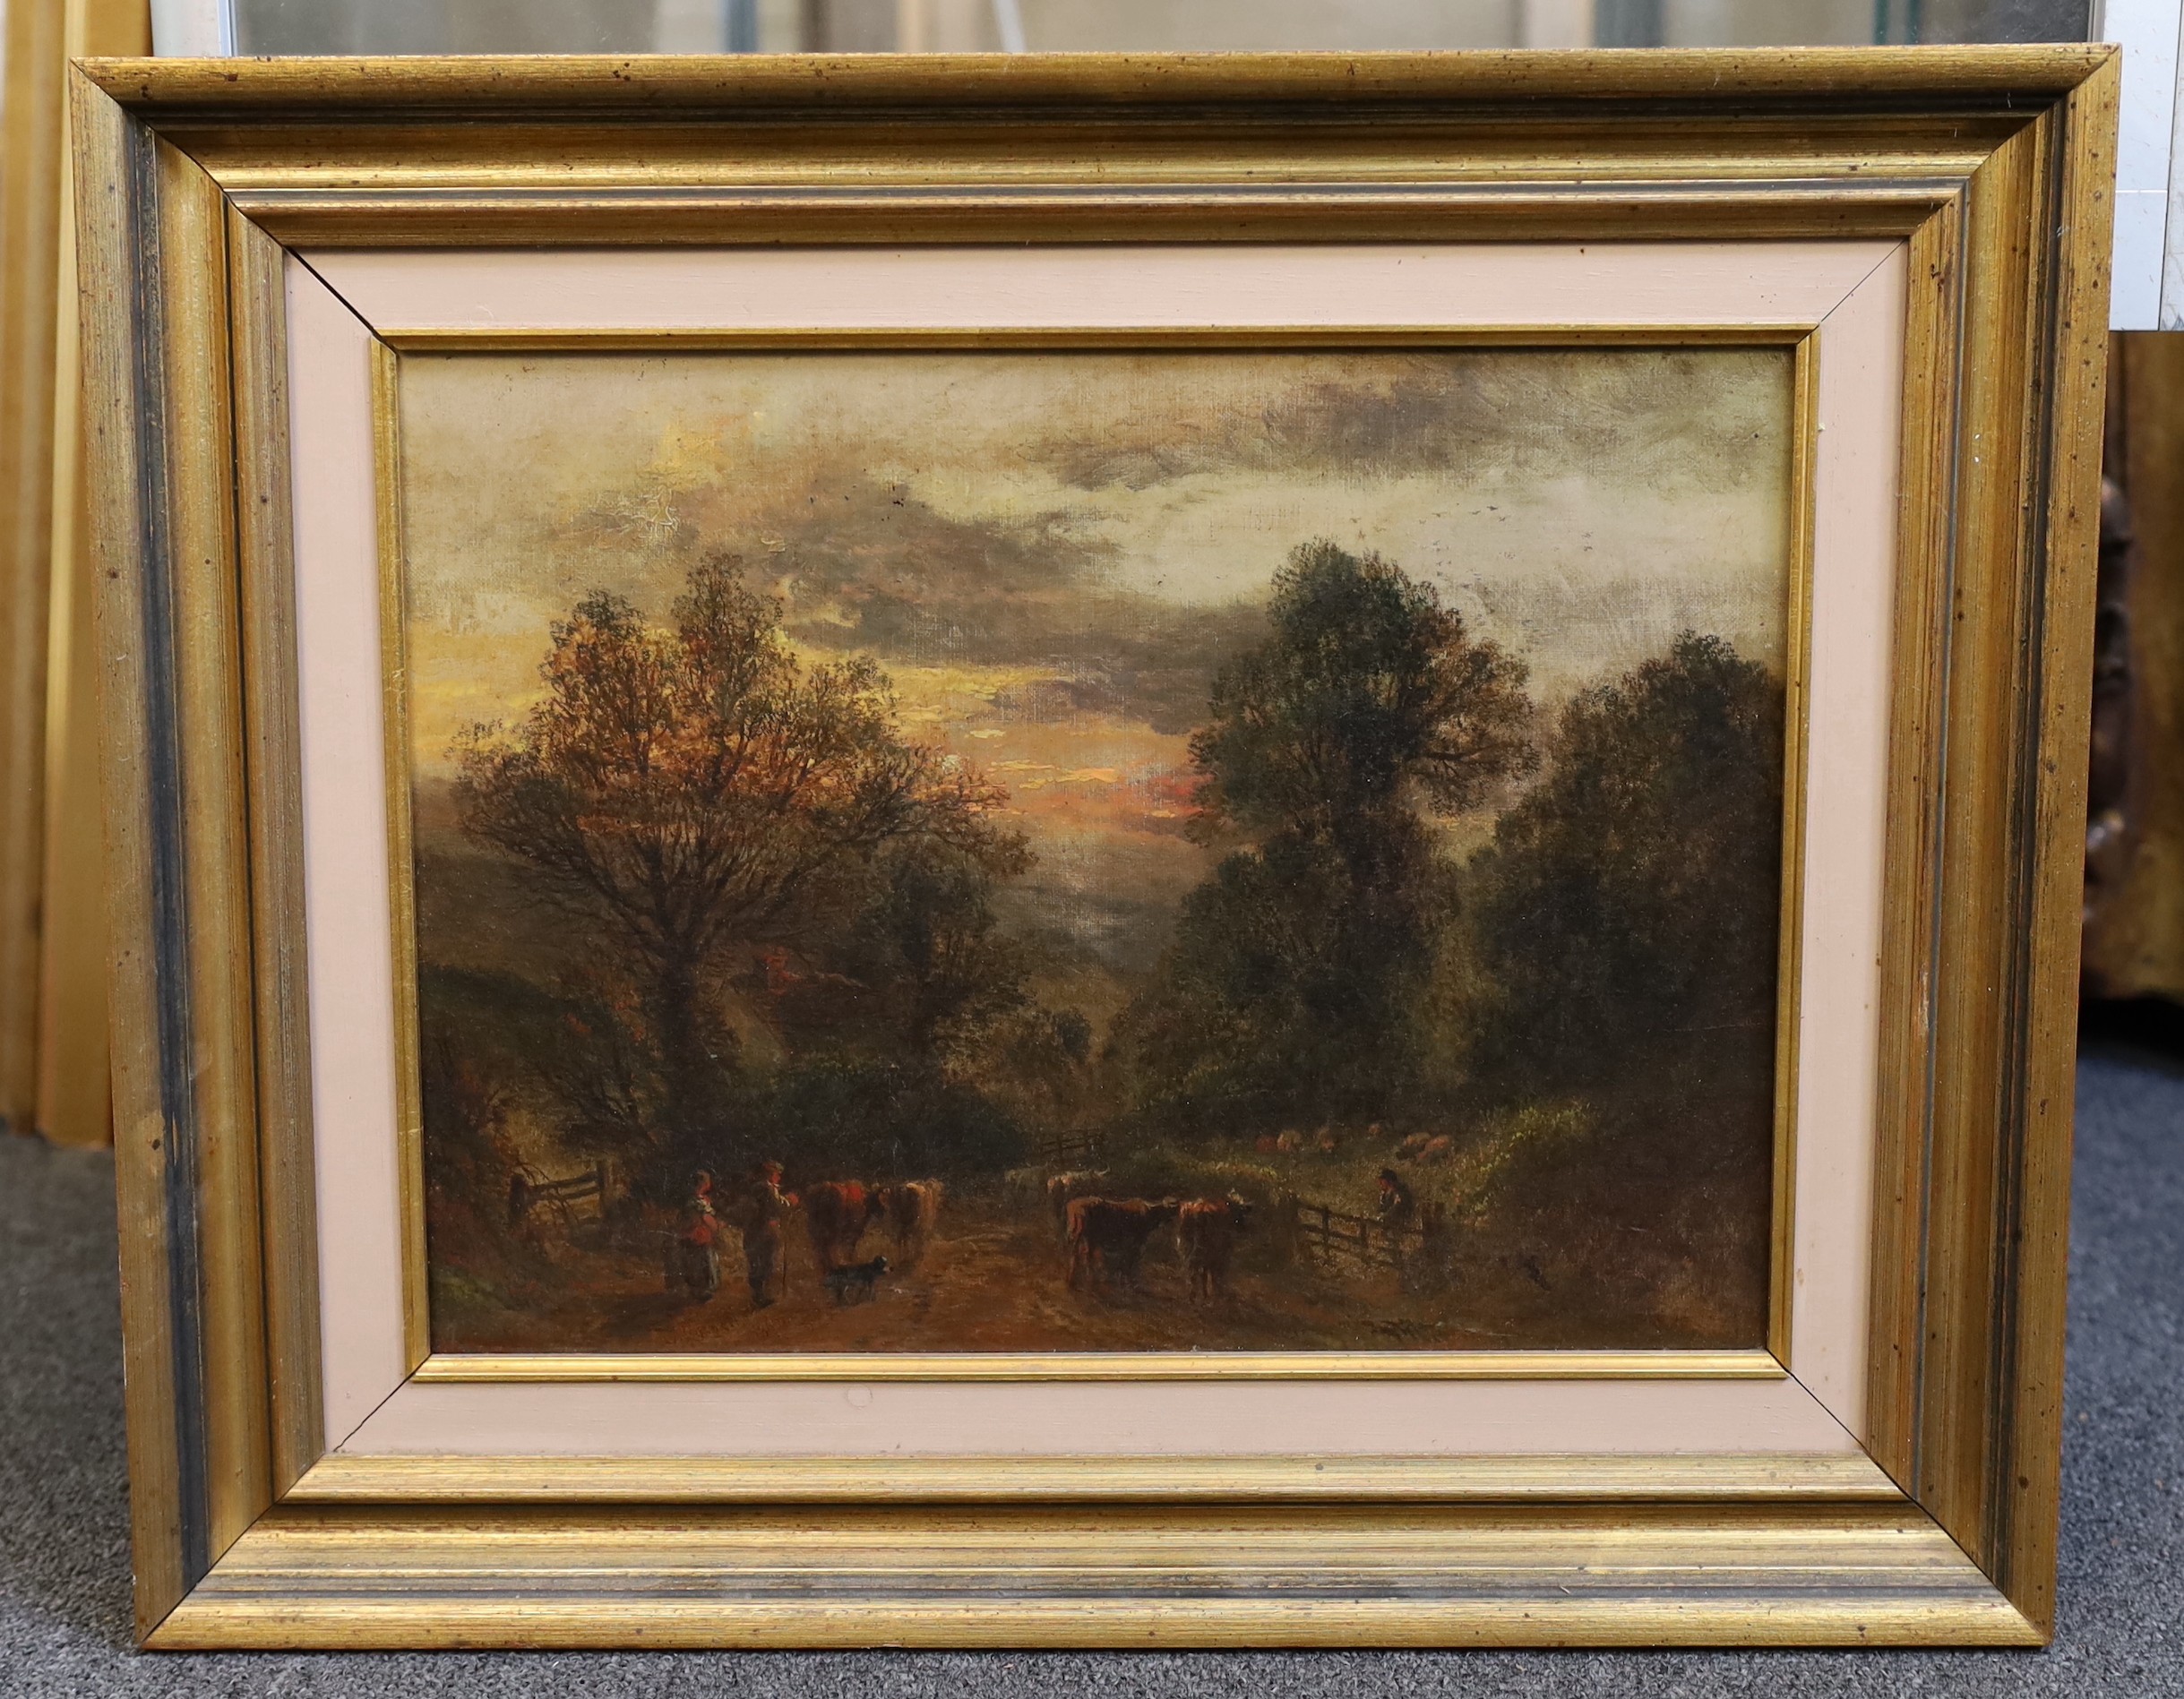 Follower of John Linnell (British, 1792-1882), 'Returning Home', oil on canvas, 30 x 40cm